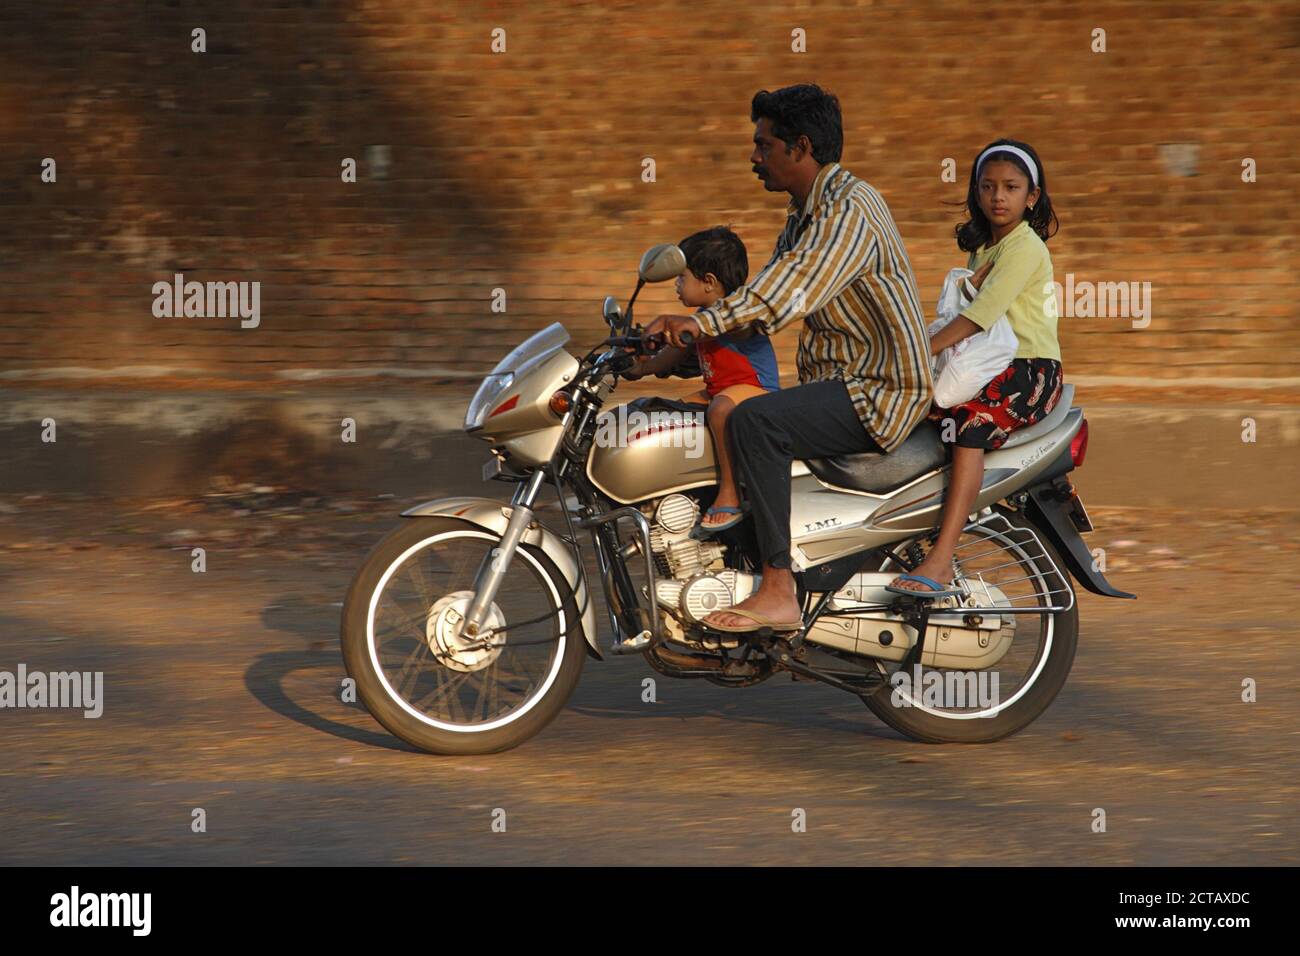 Famiglia indiana su piccola moto Hero Honda, Kerala, India 18 febbraio 2007 Foto Stock